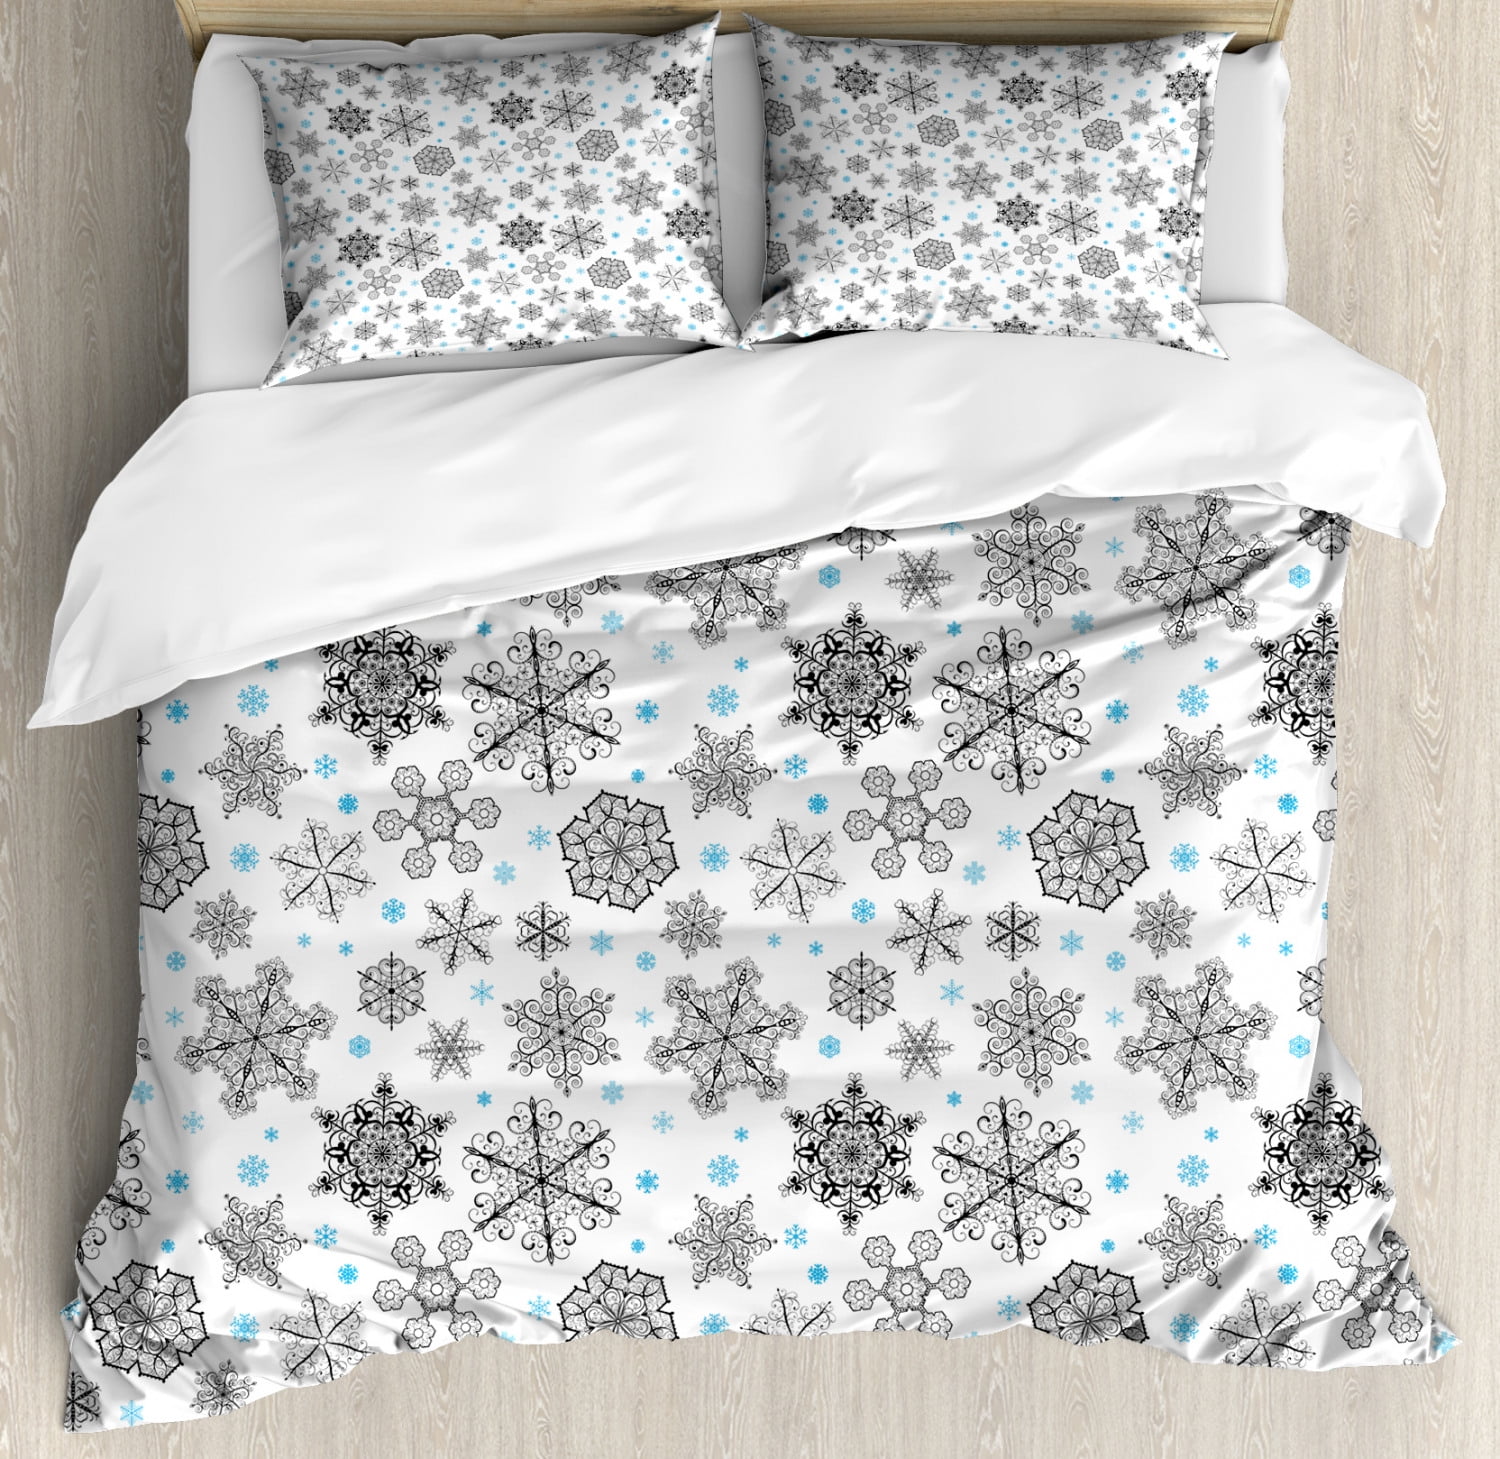 Snowflake Duvet Cover Set, Lace Style Arrangement of Snowflakes Winter Season Christmas